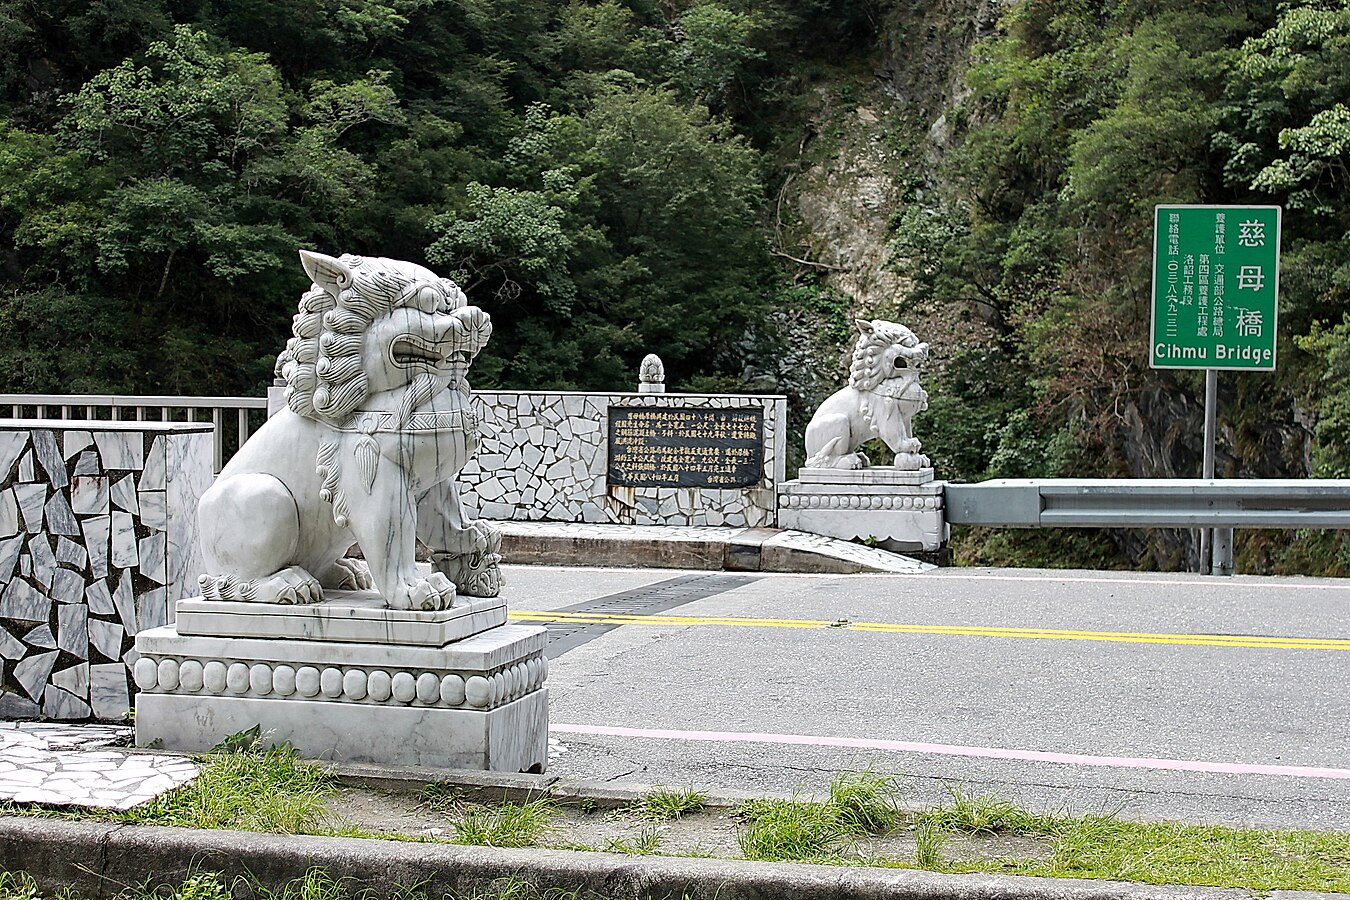 Statues of lions on the Cihmu Bridge